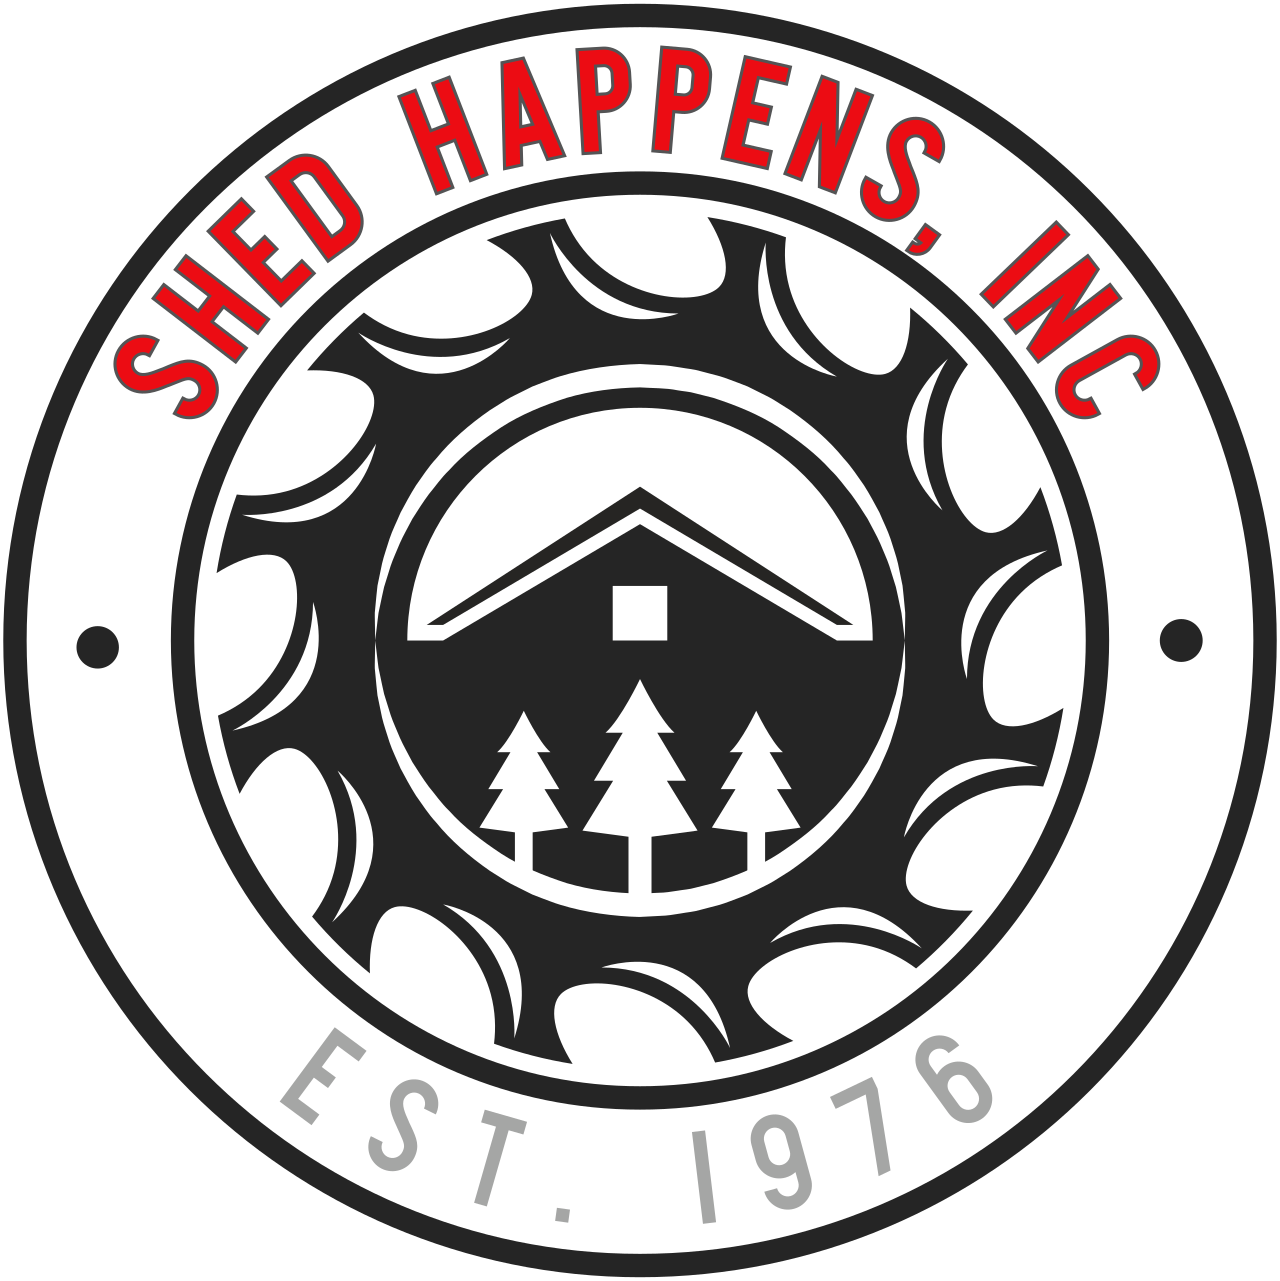 Shed Happens, Inc.